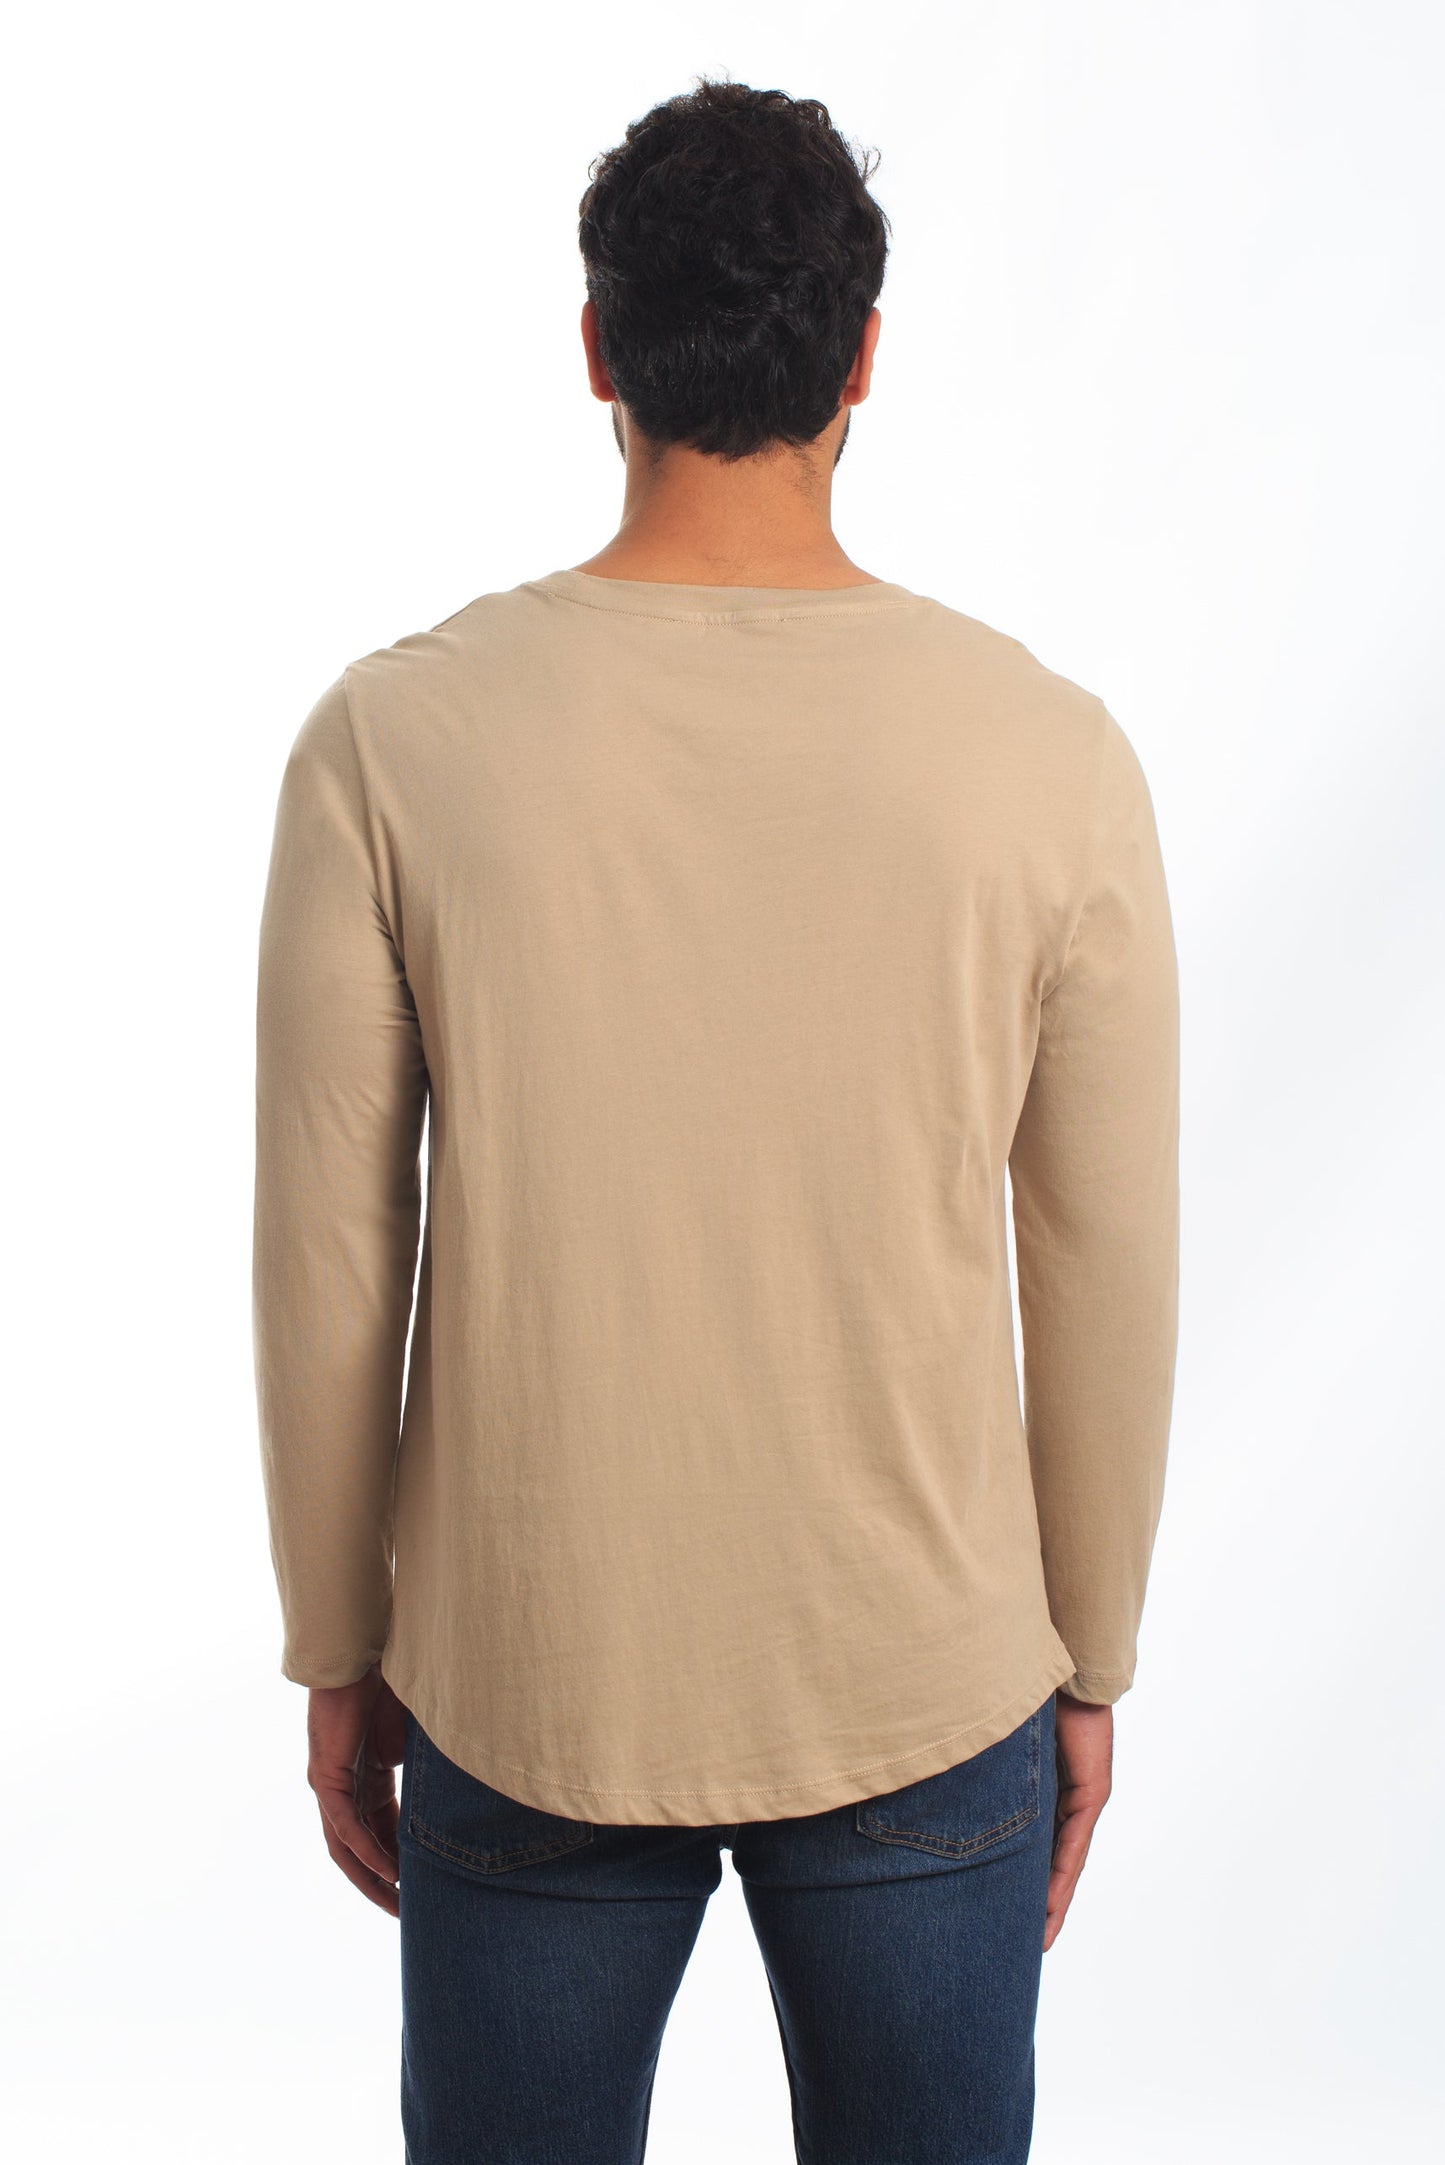 Sand Long Sleeve T-Shirt TEL-115 Back